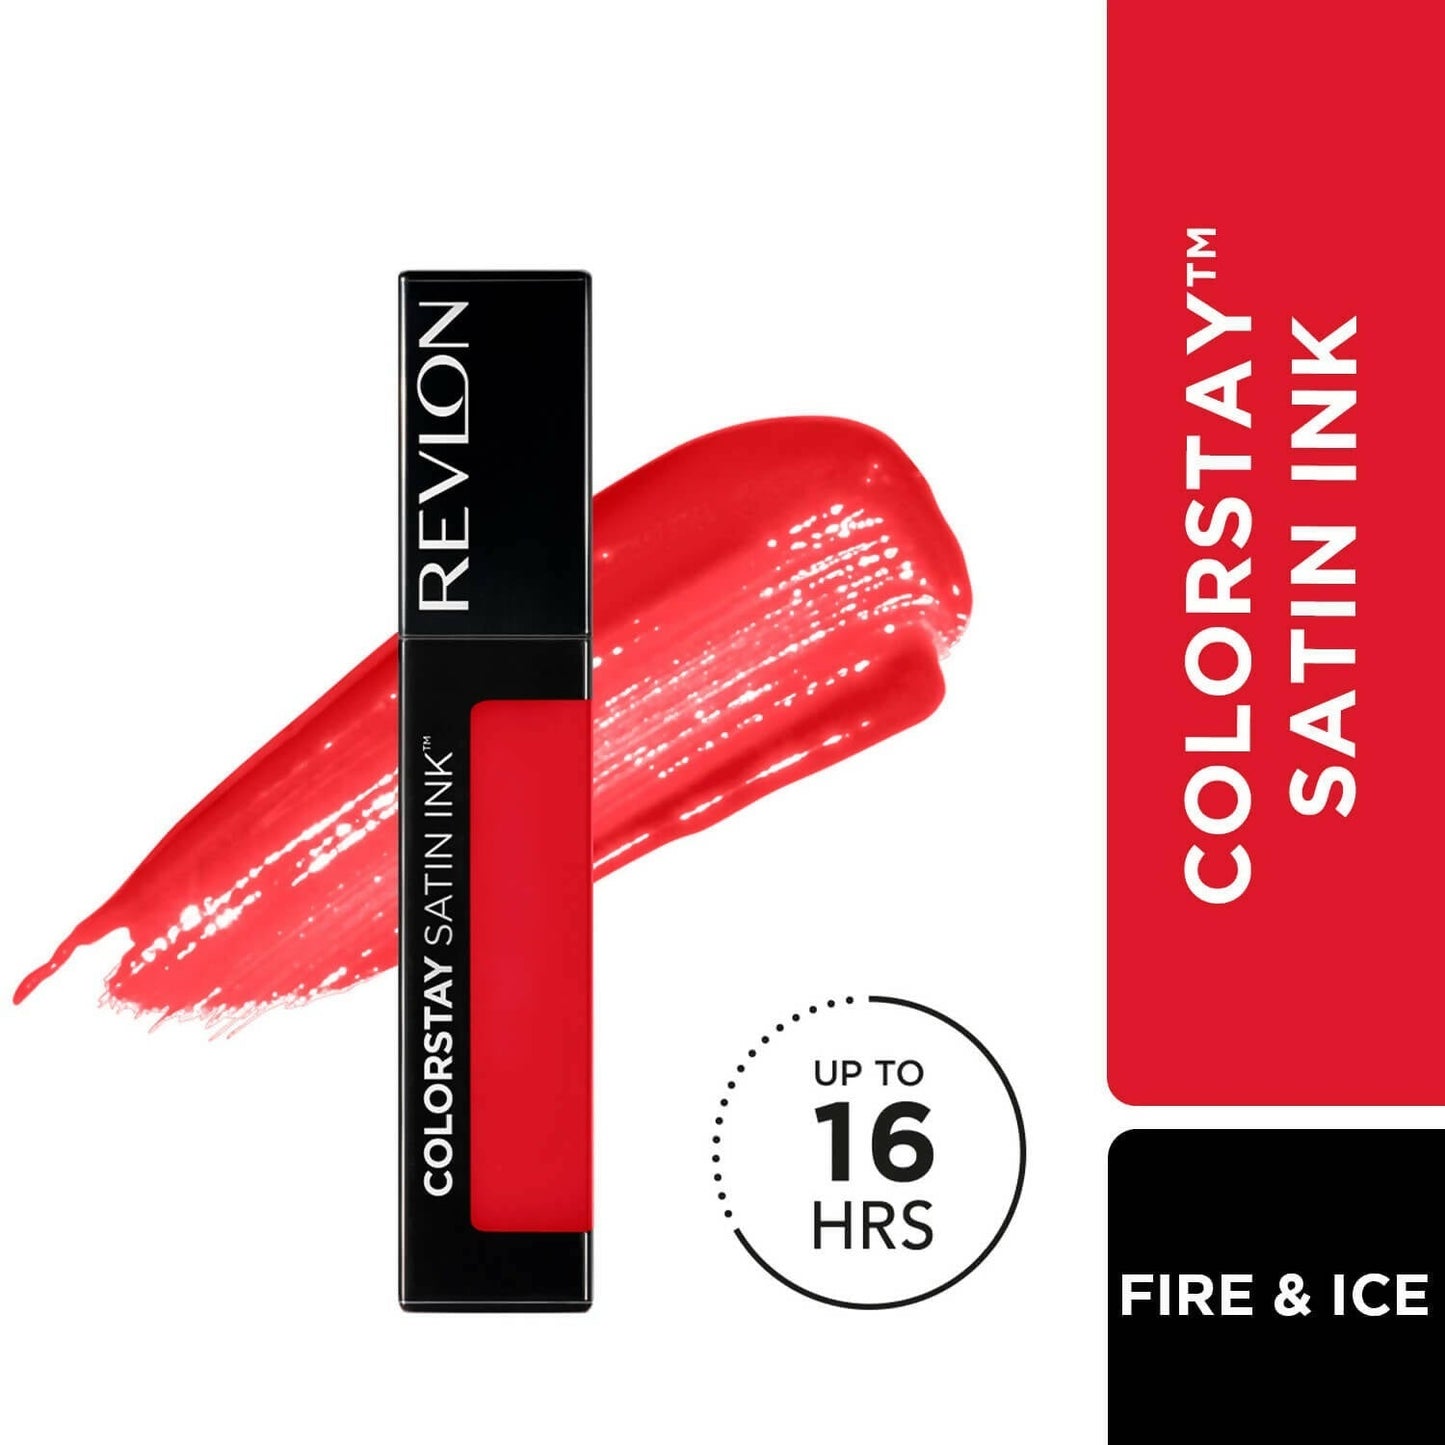 Revlon Colorstay Satin Ink Liquid Lip Color - Fire & Ice